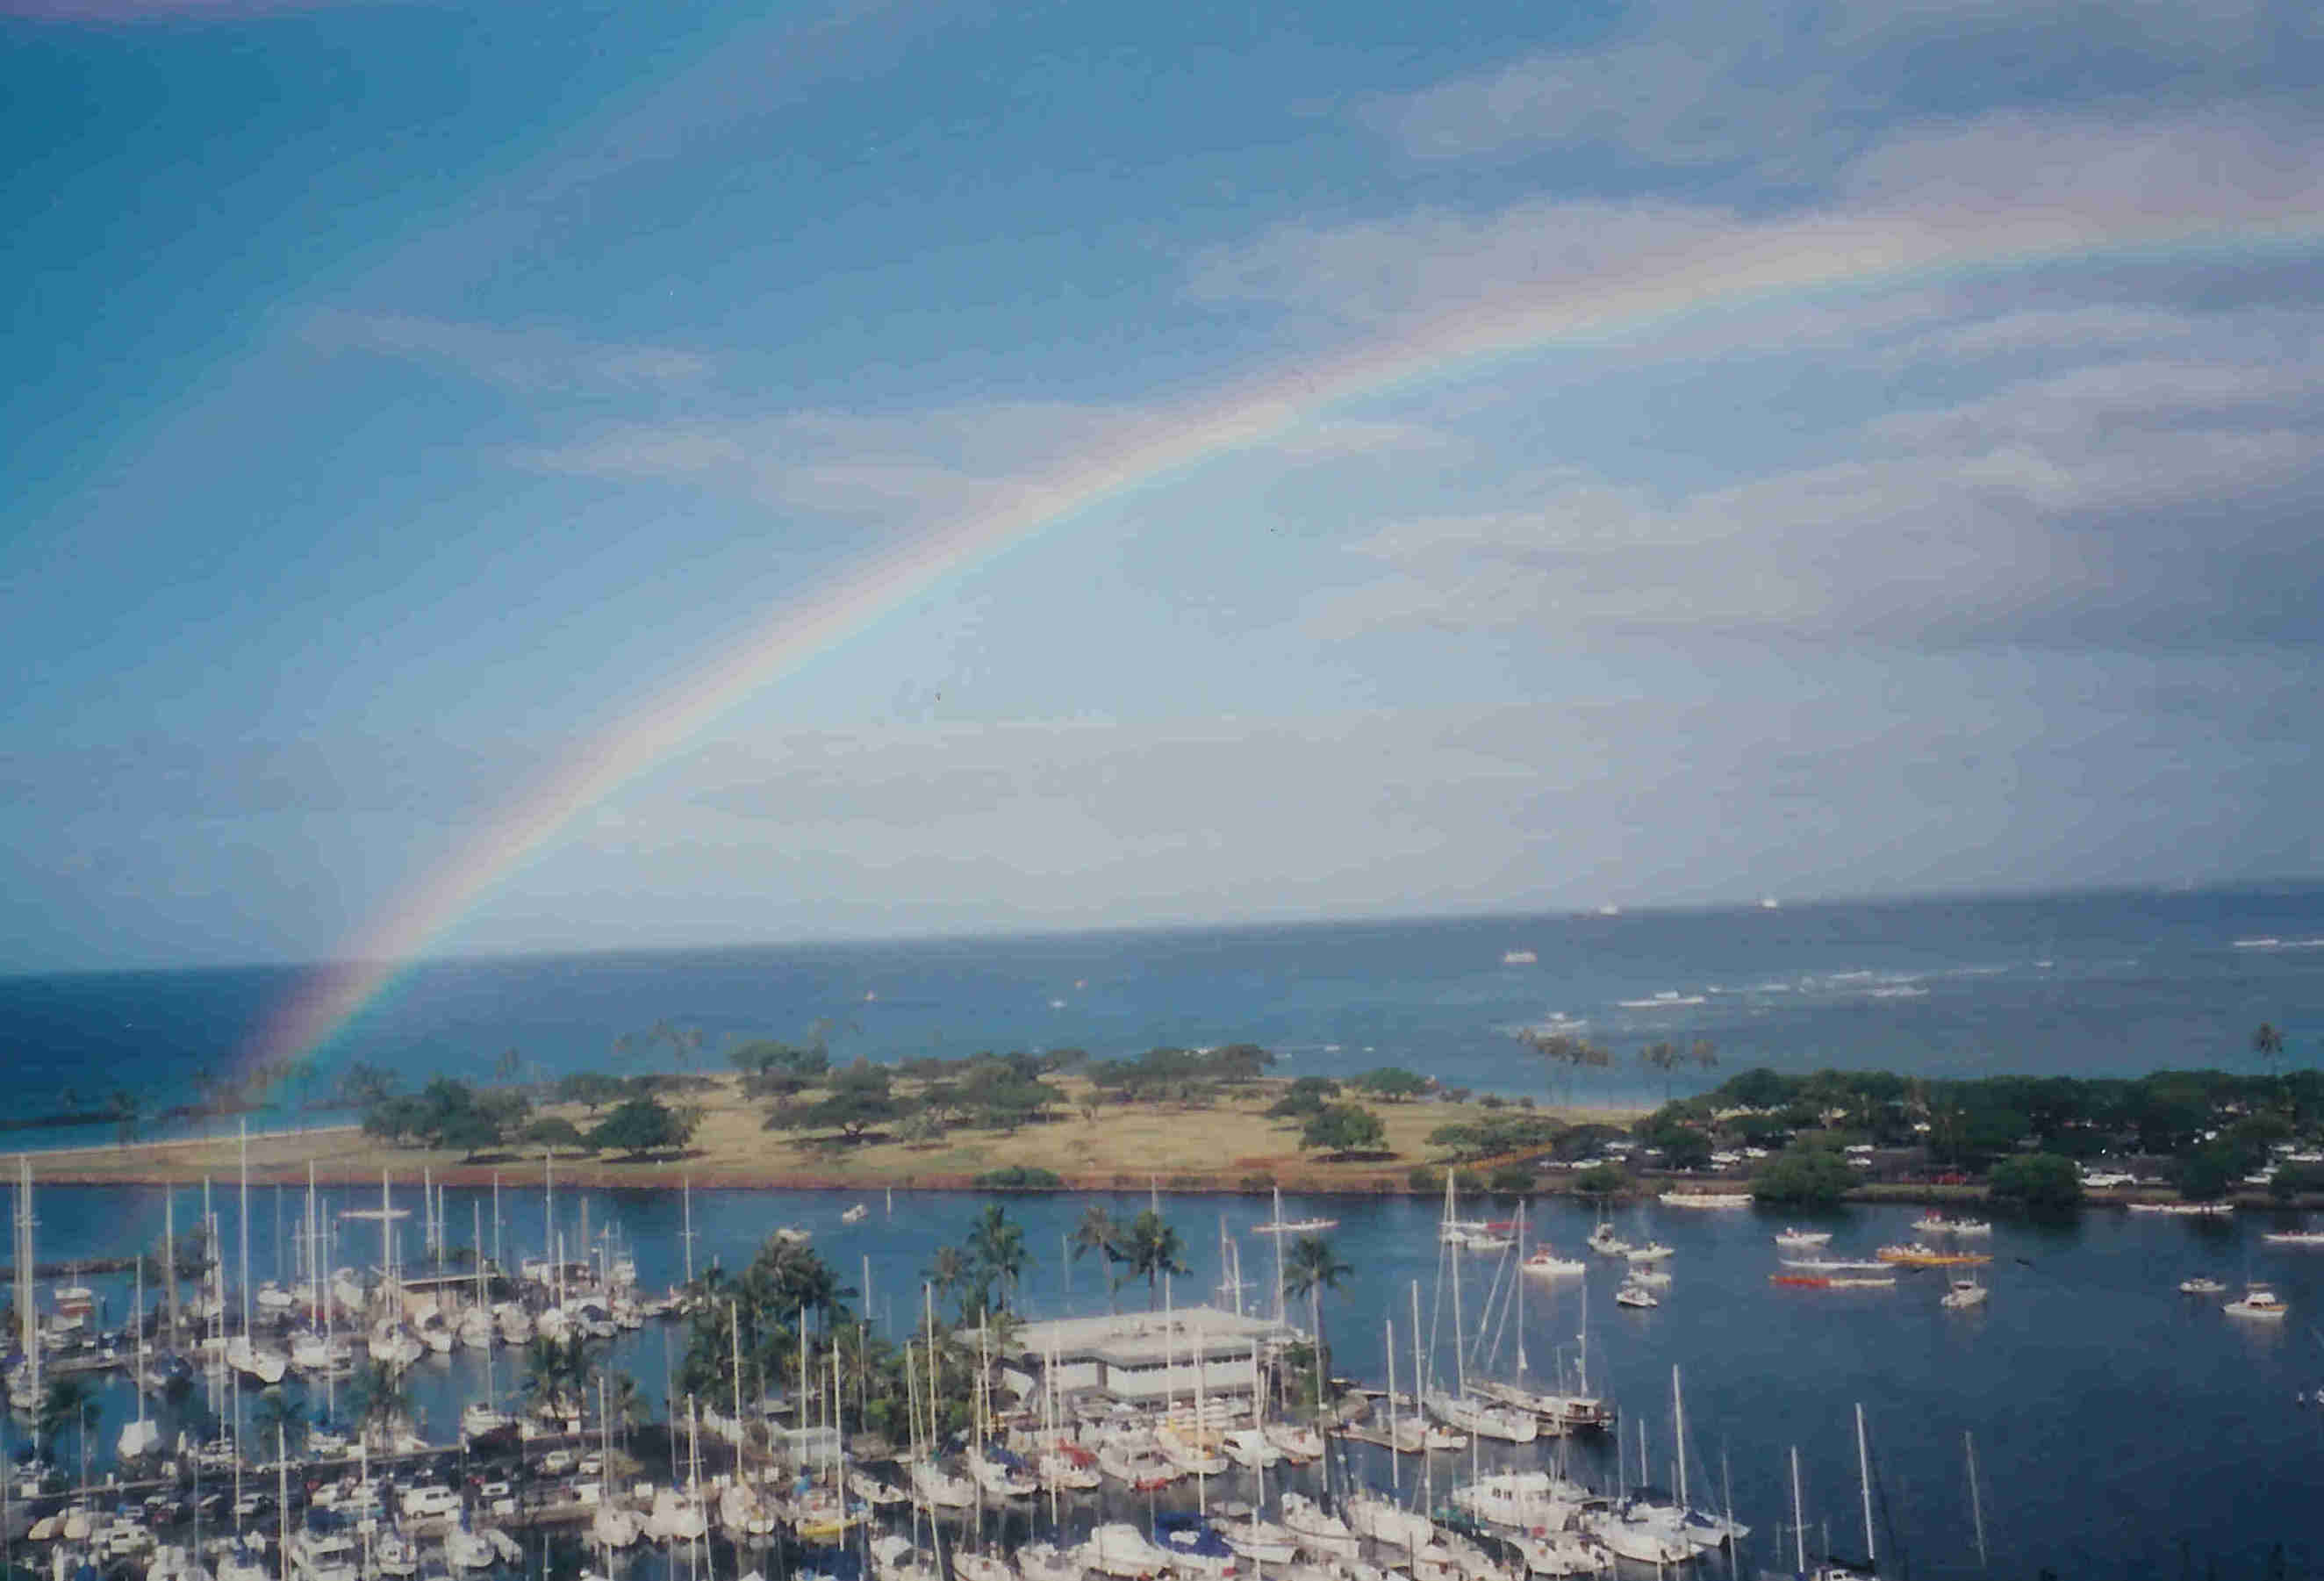 Rainbow over Ala Moana, Ala Wai Harbor,Waikiki